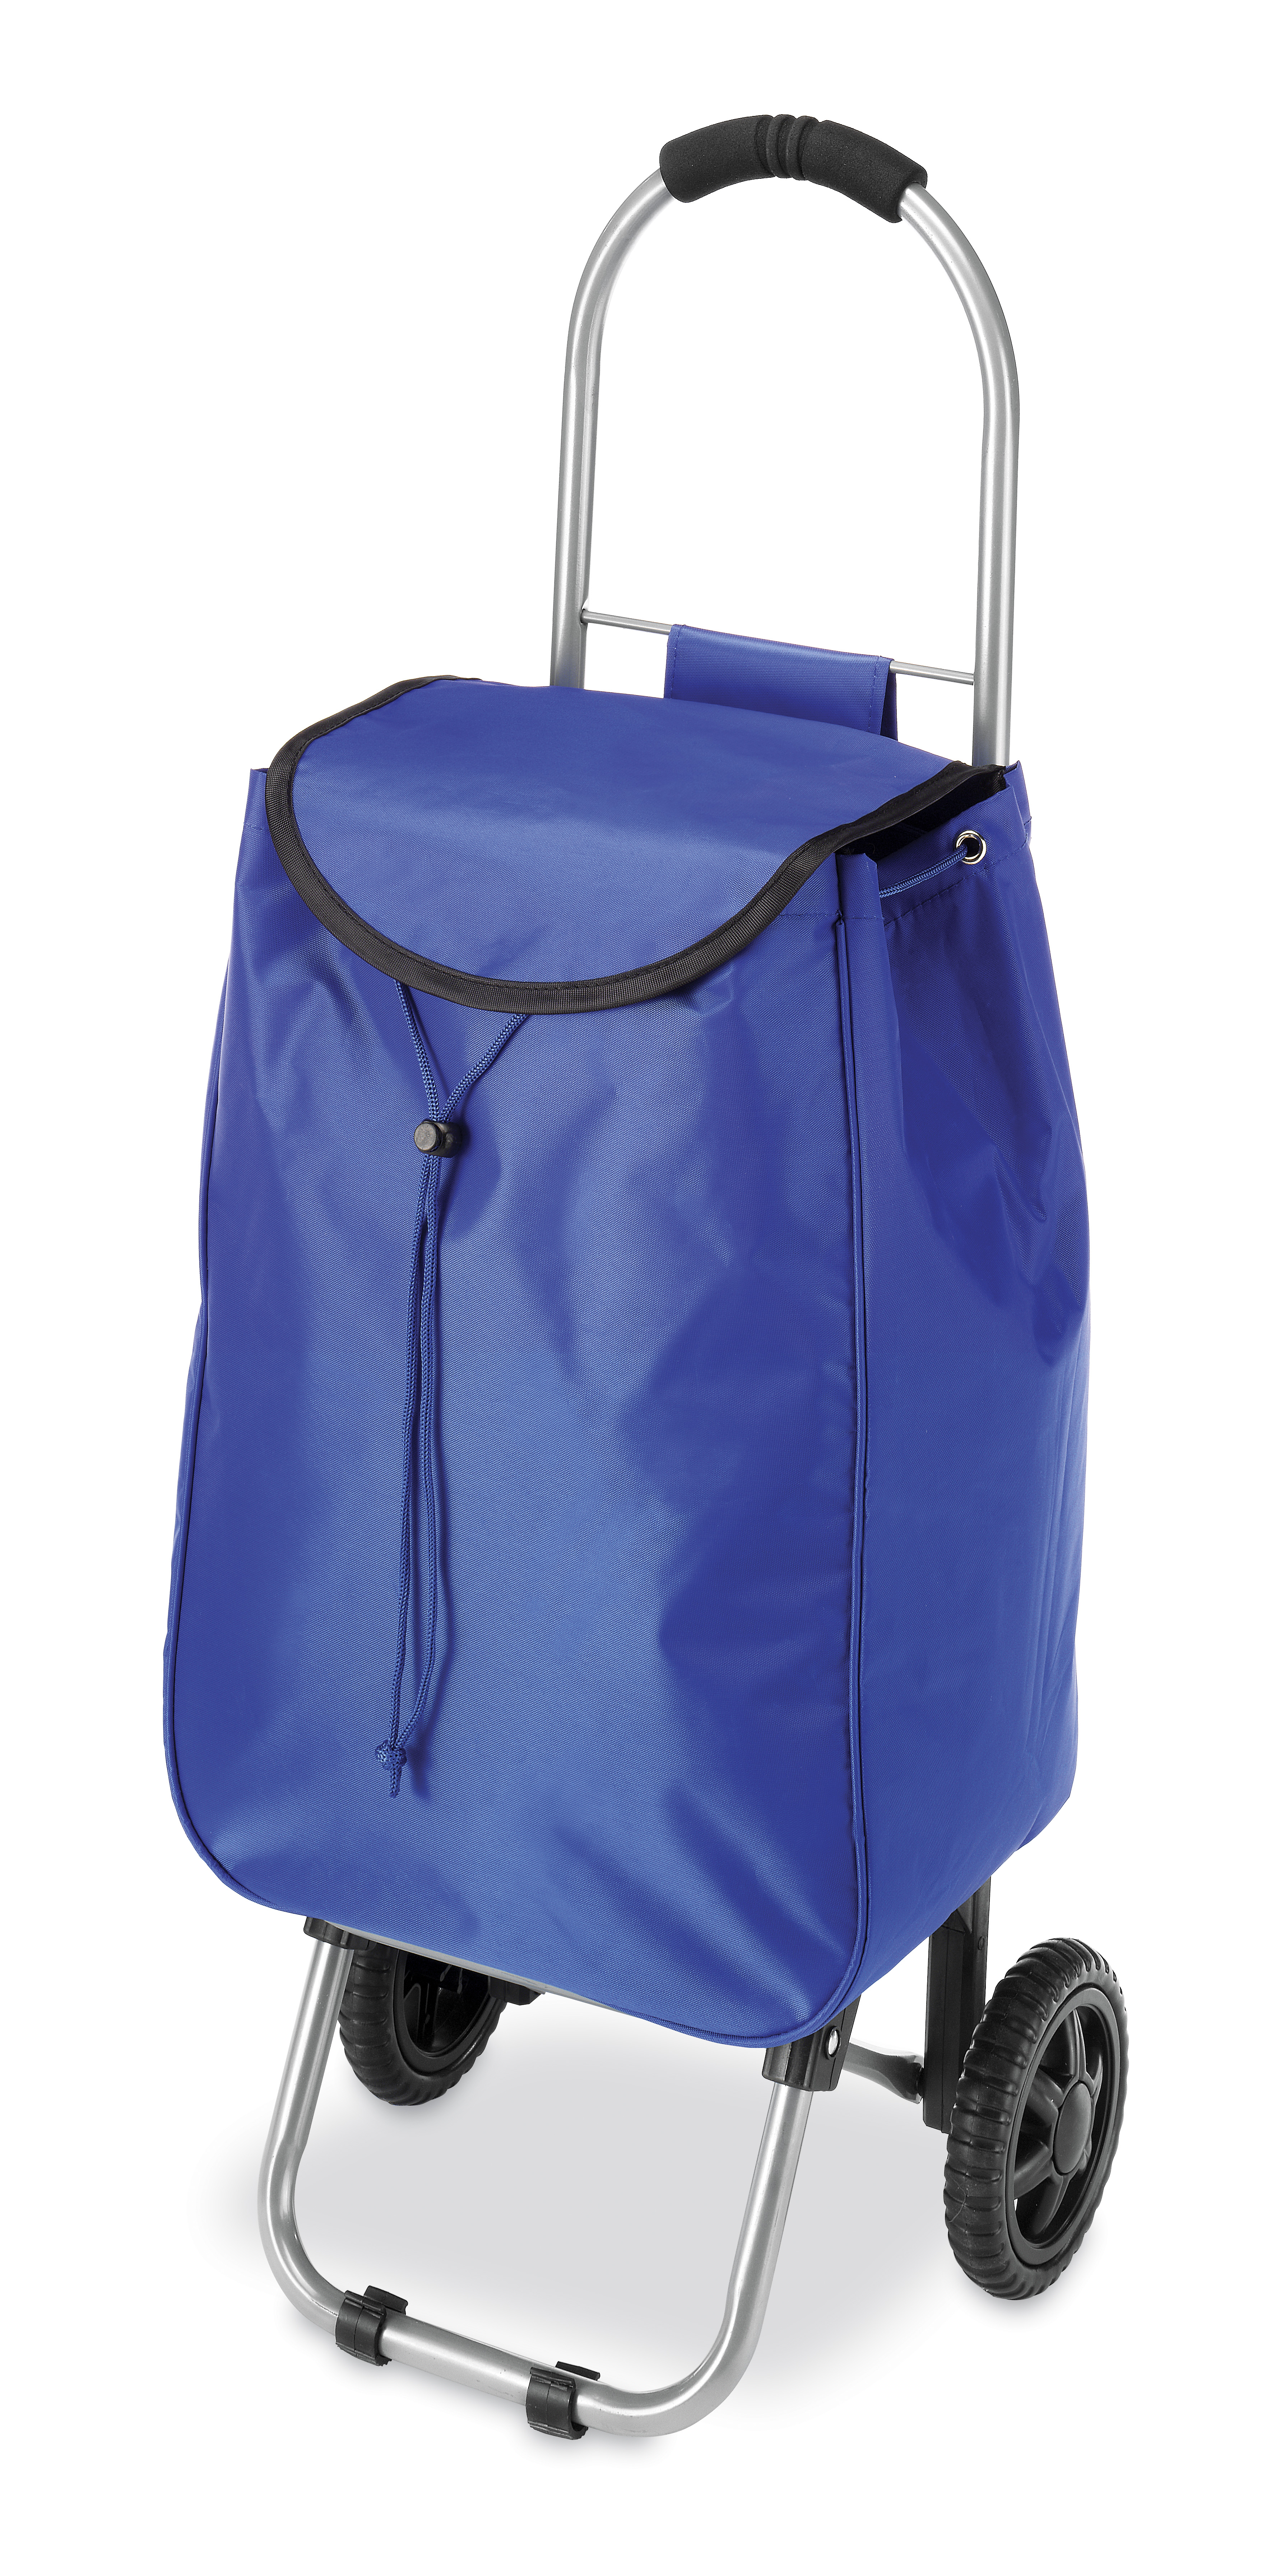 Whitmor Rolling Bag Cart - Blue - image 2 of 2